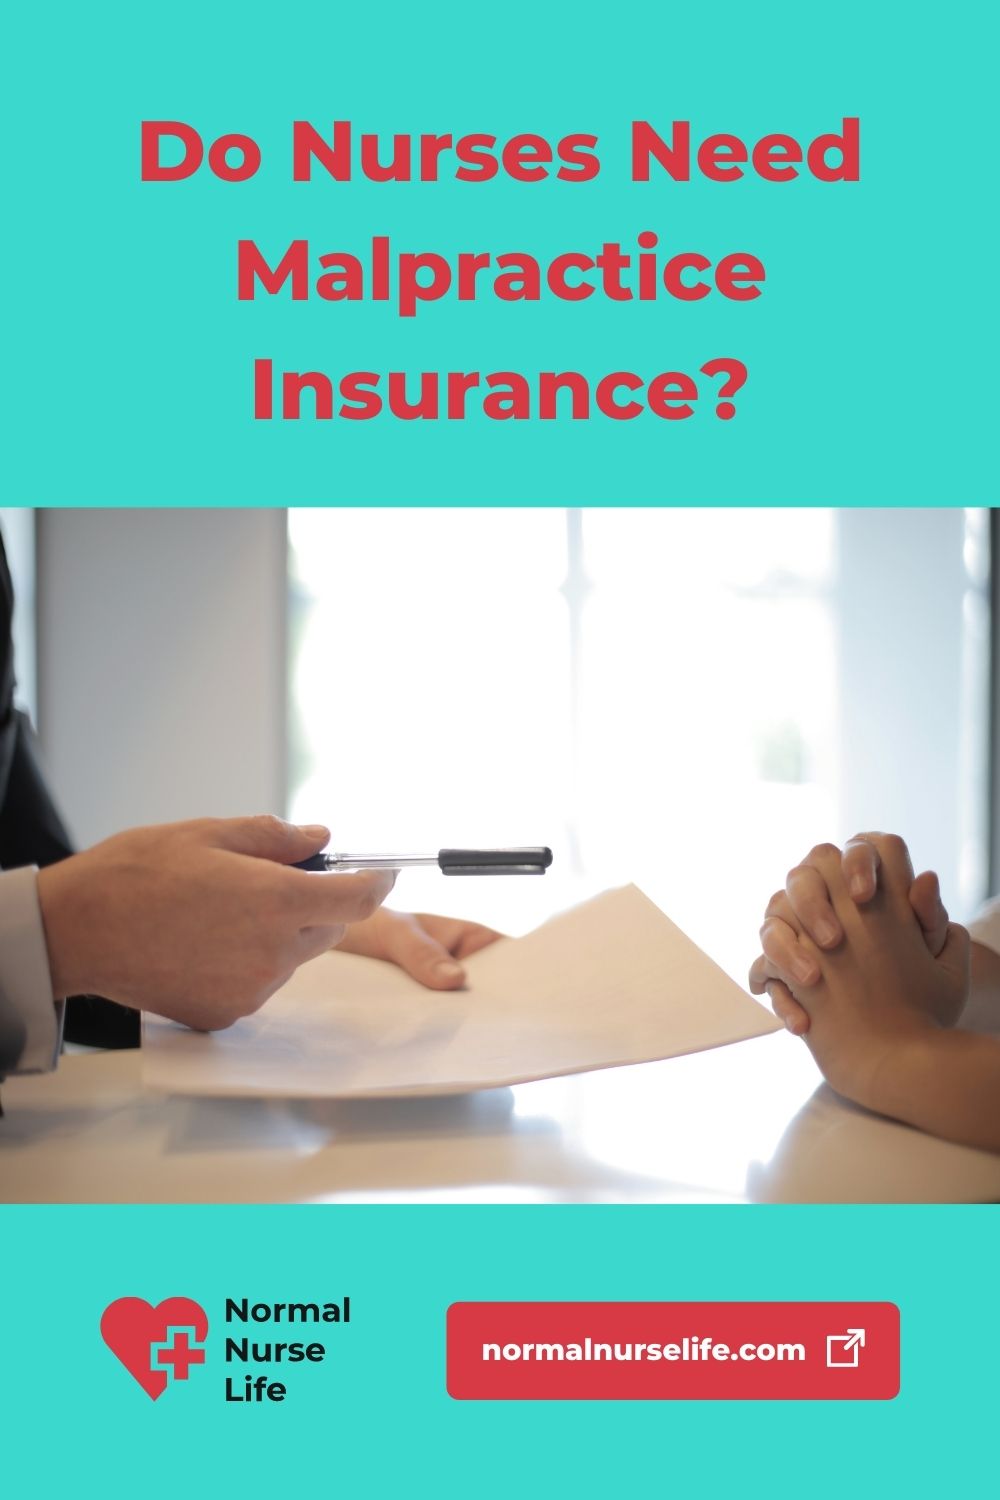 Why do nurses need malpractice insurance?